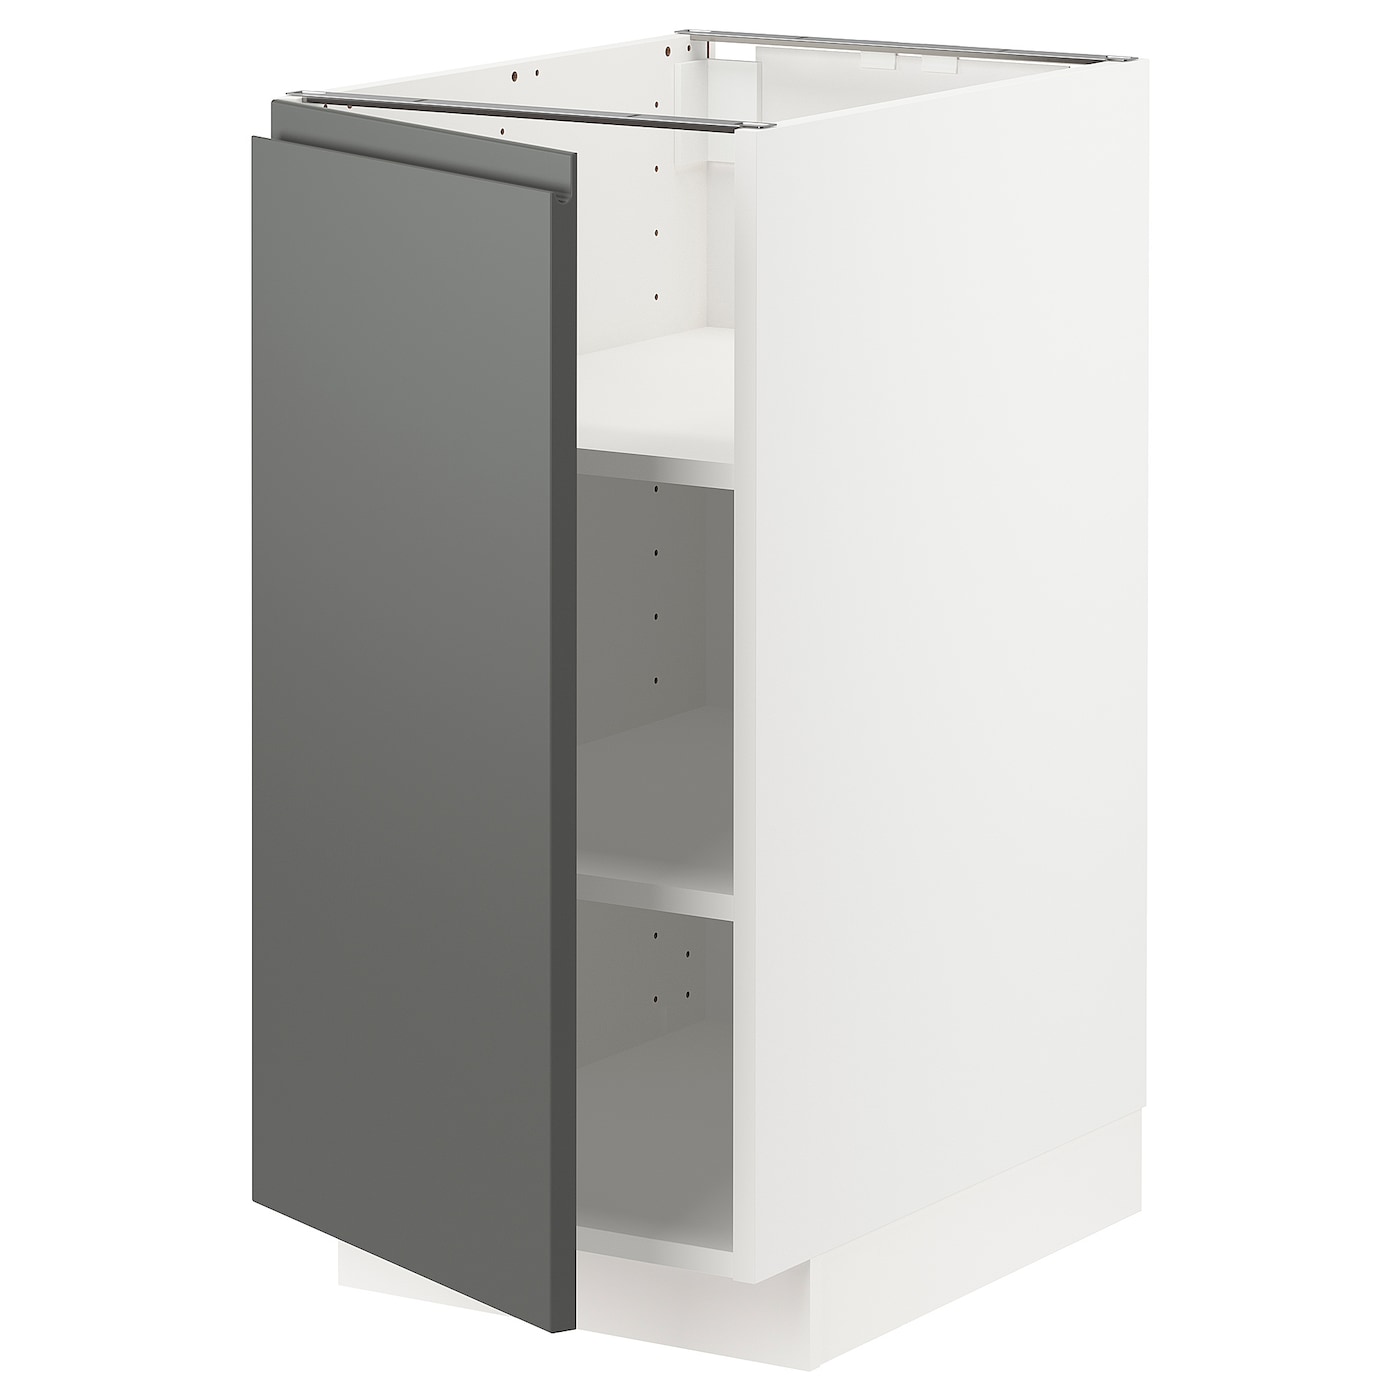 Напольный шкаф - METOD IKEA/ МЕТОД ИКЕА,  88х40 см, белый/серый